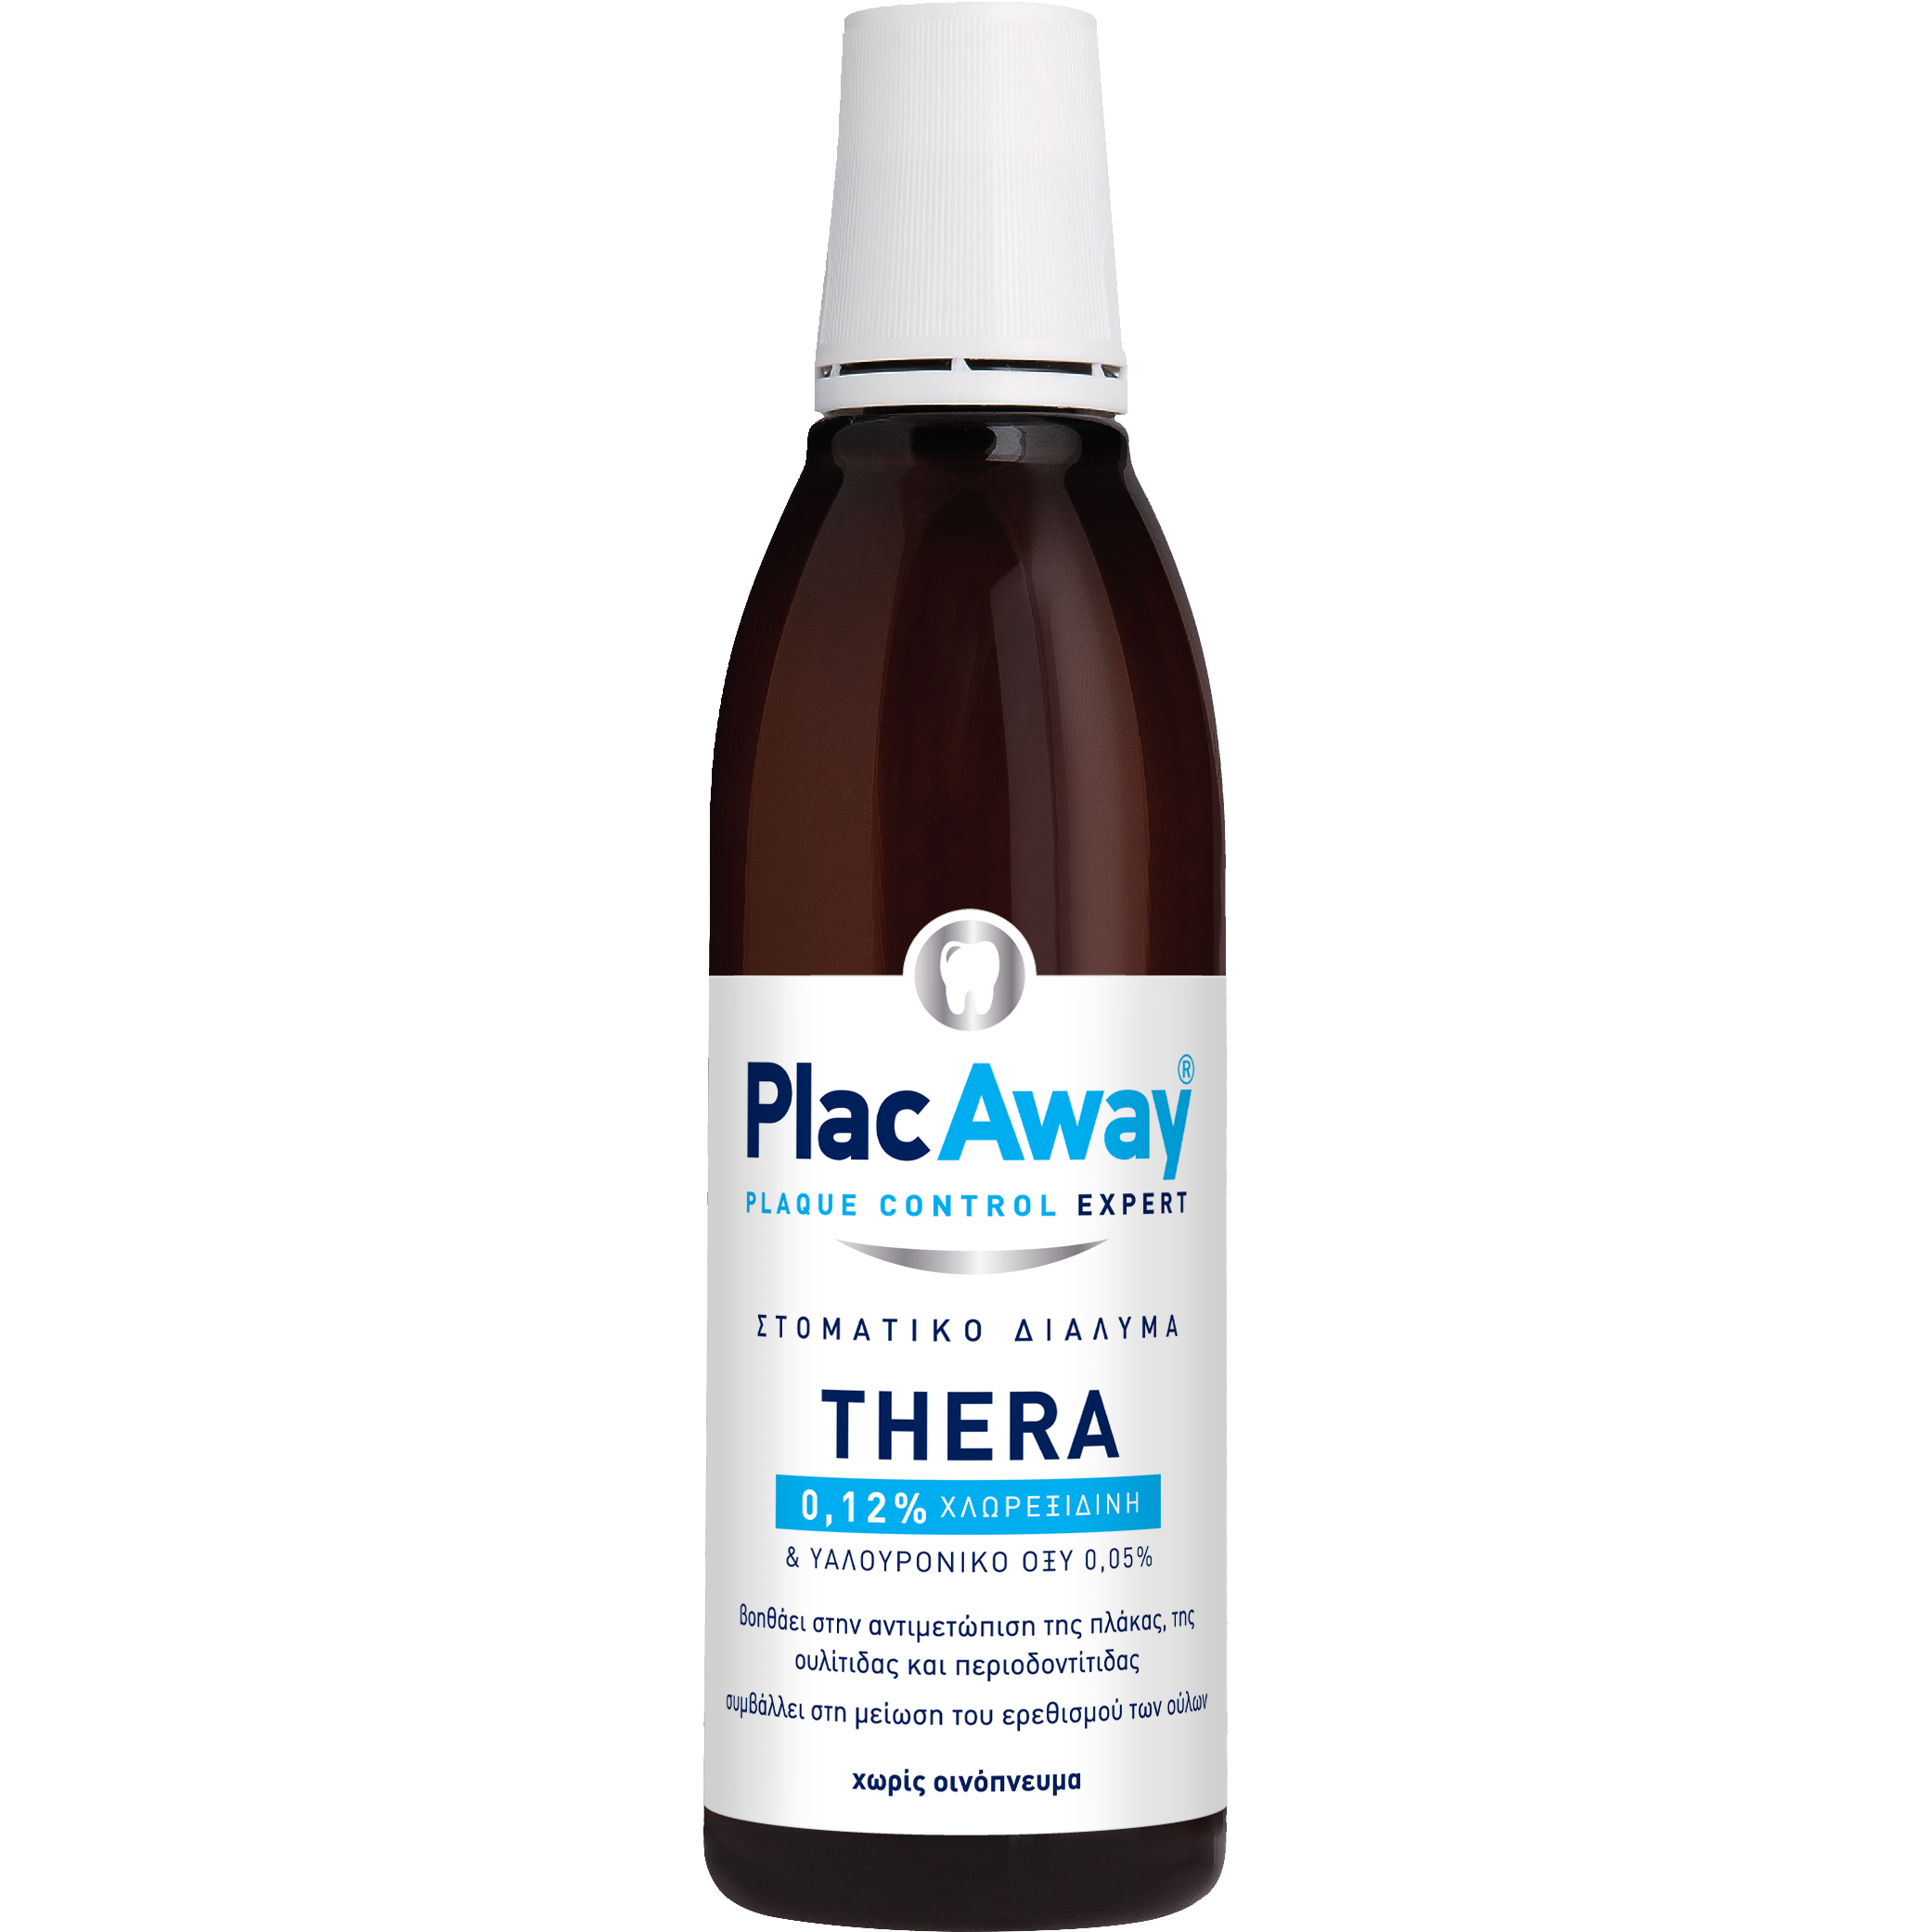 Plac Away Thera Plus 0.12% Στοματικό Διάλυμα με Διγλυκονική Χλωρεξιδίνη, Εμποδίζει το Σχηματισμό της Μικροβιακής Πλάκας 250ml